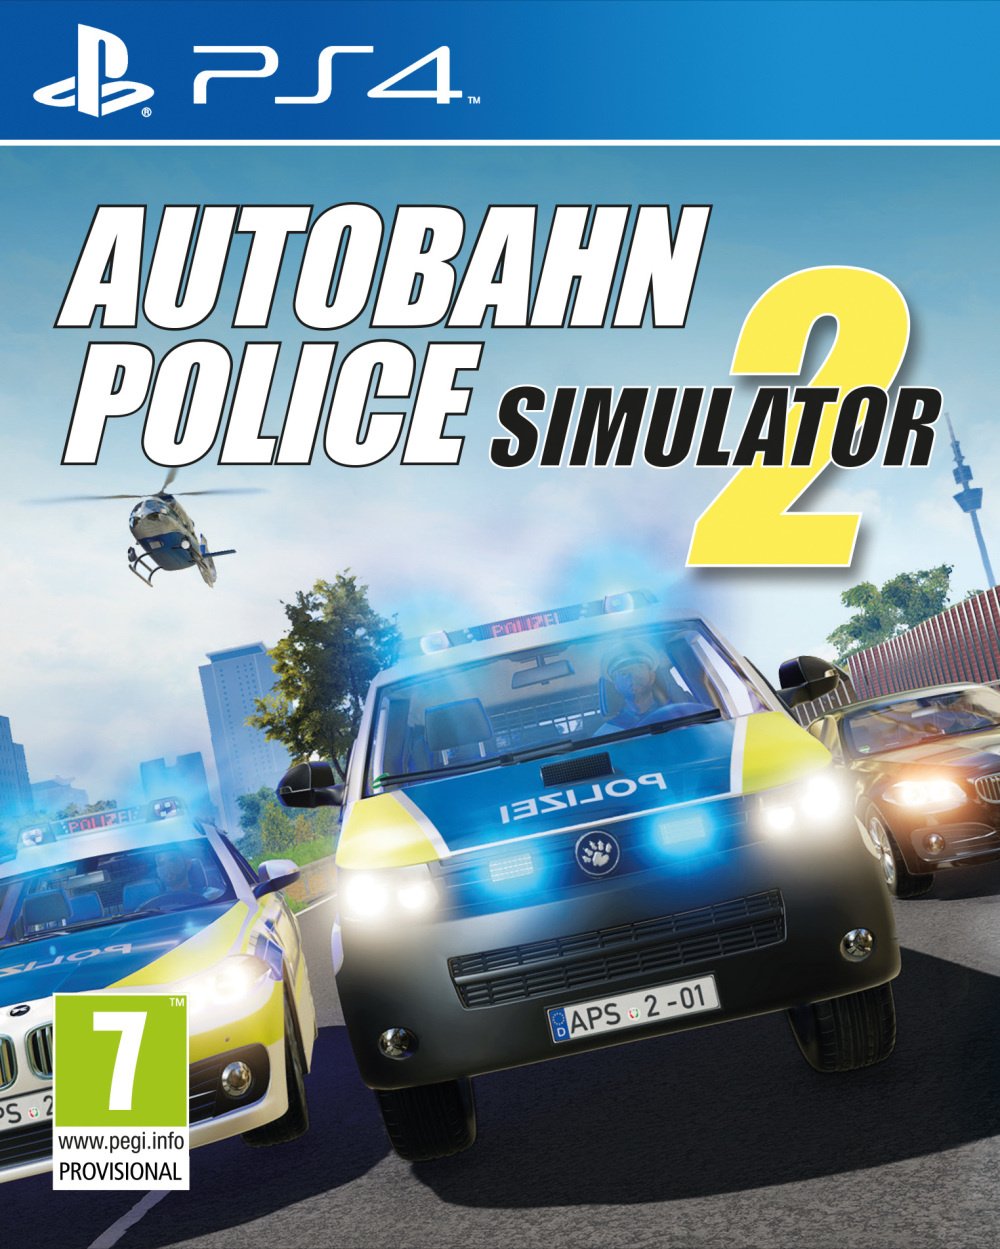 Autobahn Police Simulator 2 von Aerosoft